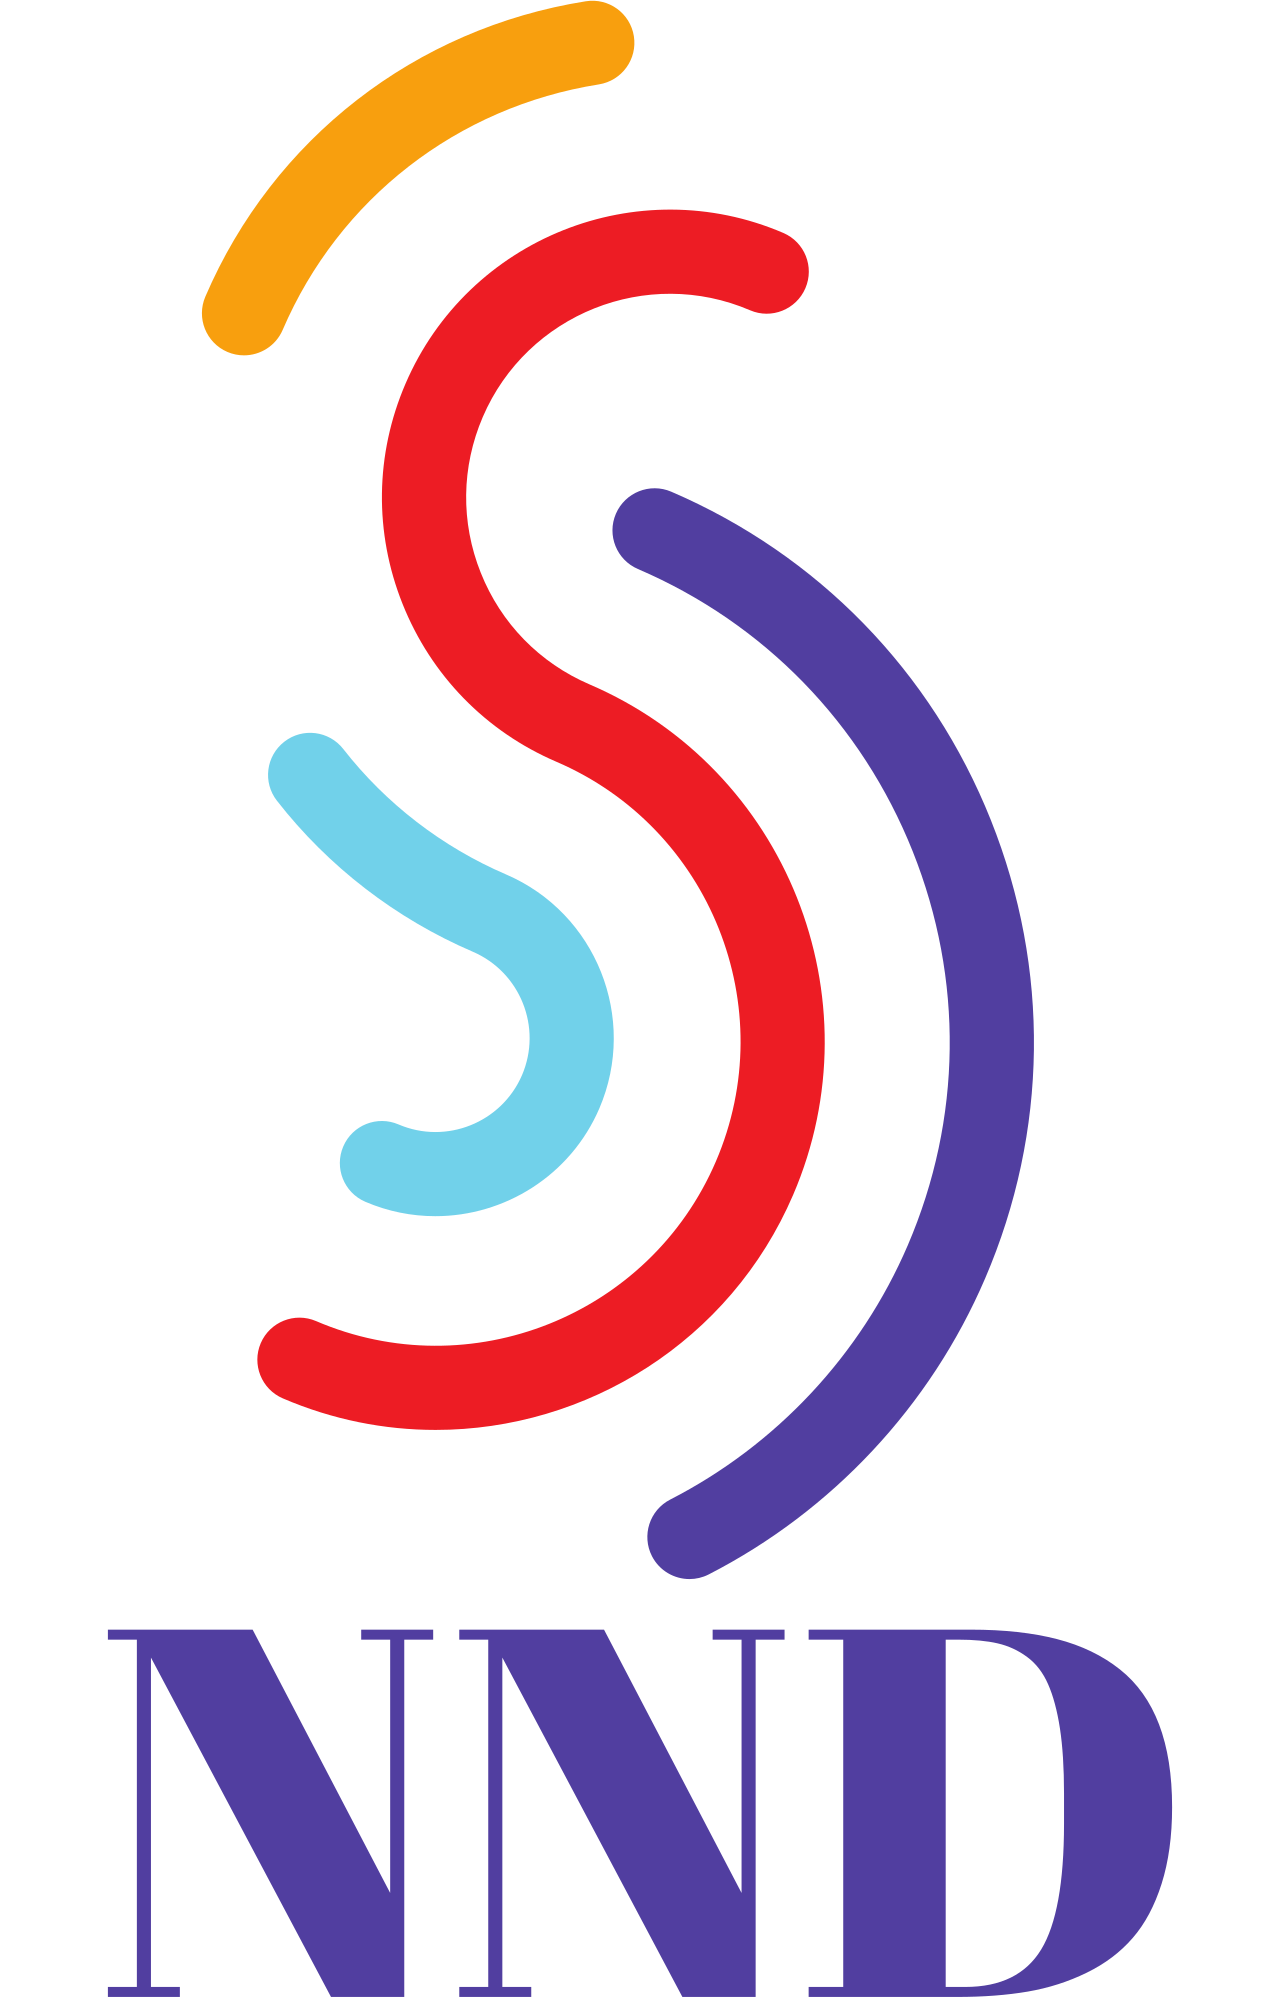 NND's logo